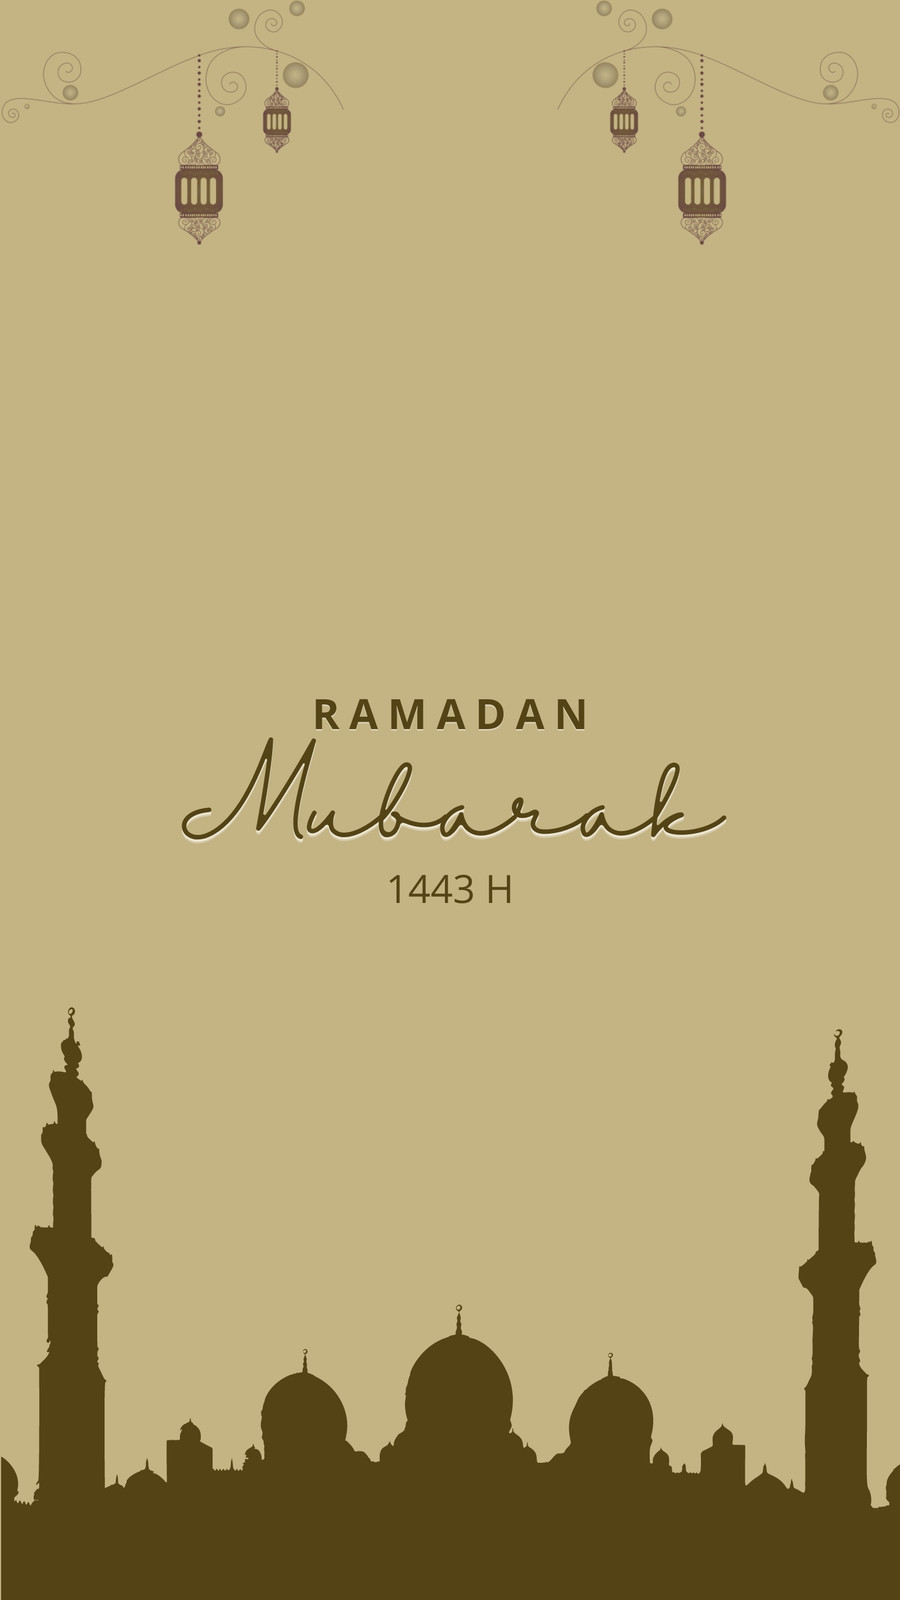 Free and customizable ramadan mubarak templates